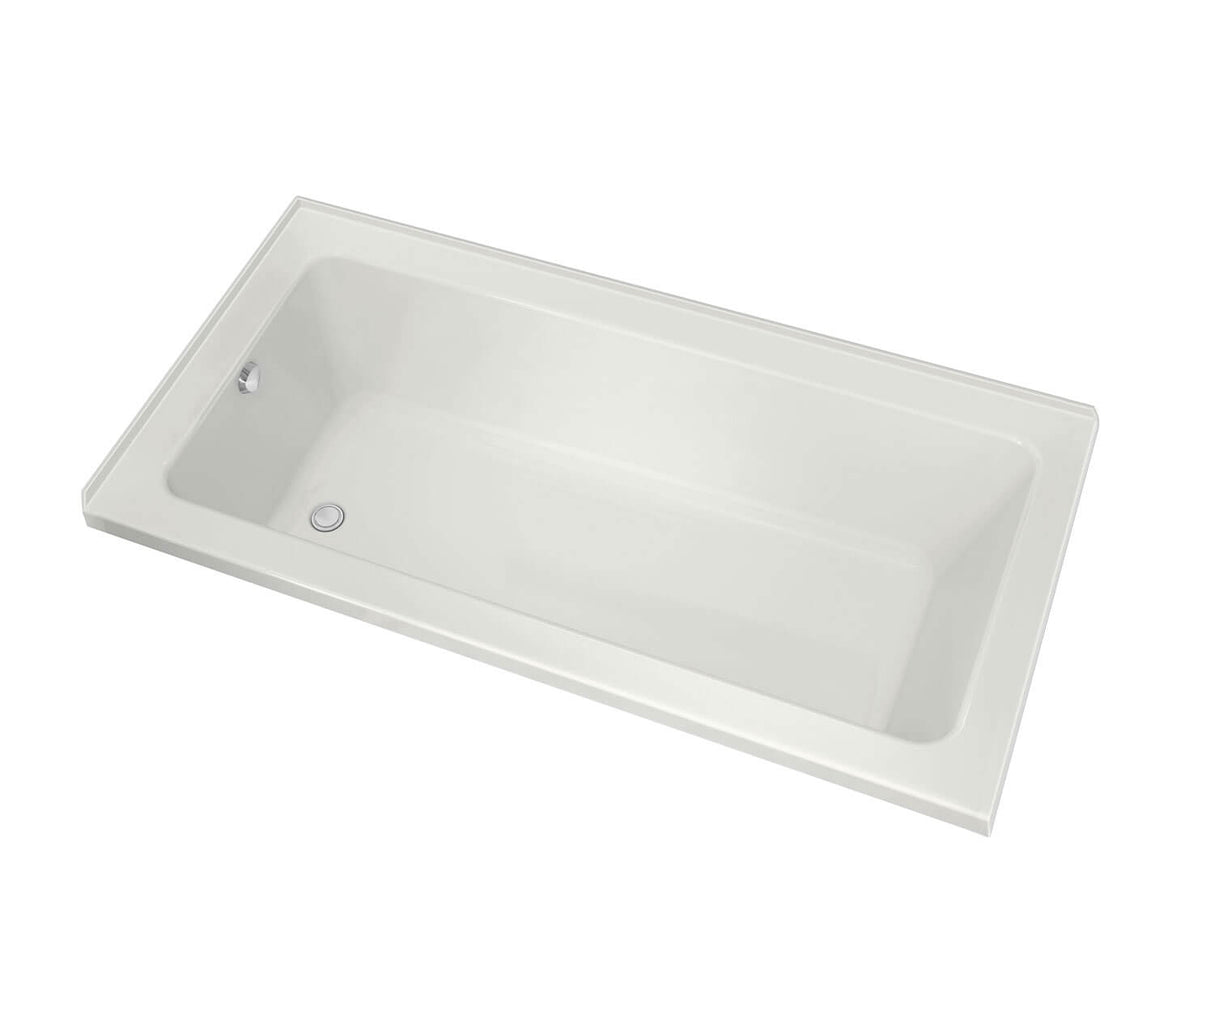 MAAX 106199-R-103-001 Pose Acrylic Corner Left Right-Hand Drain Aeroeffect Bathtub in White